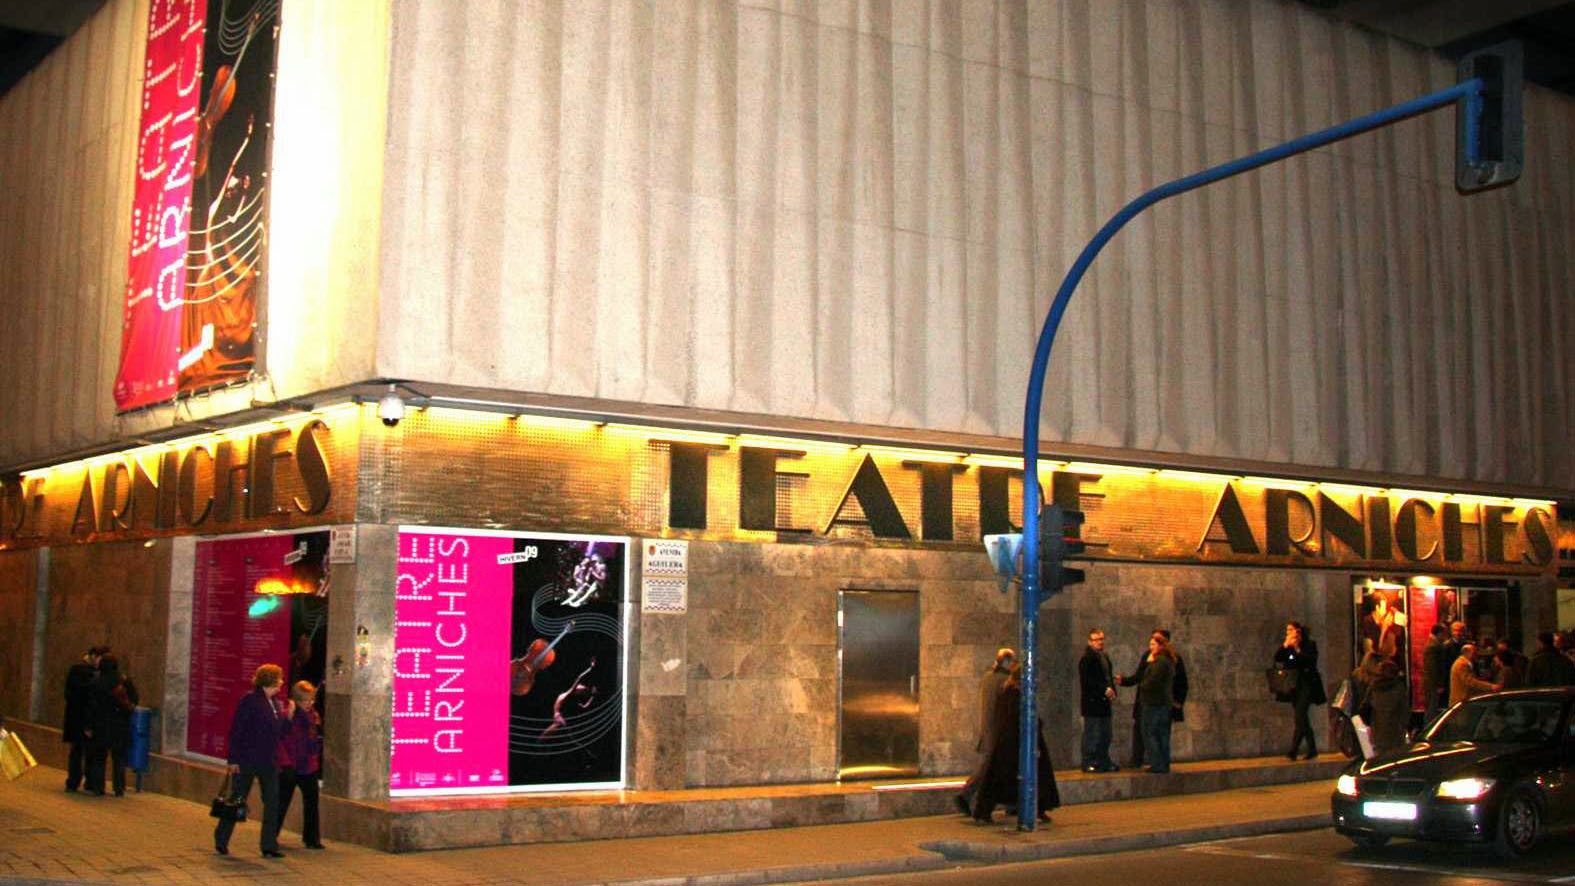 Teatro Arniches